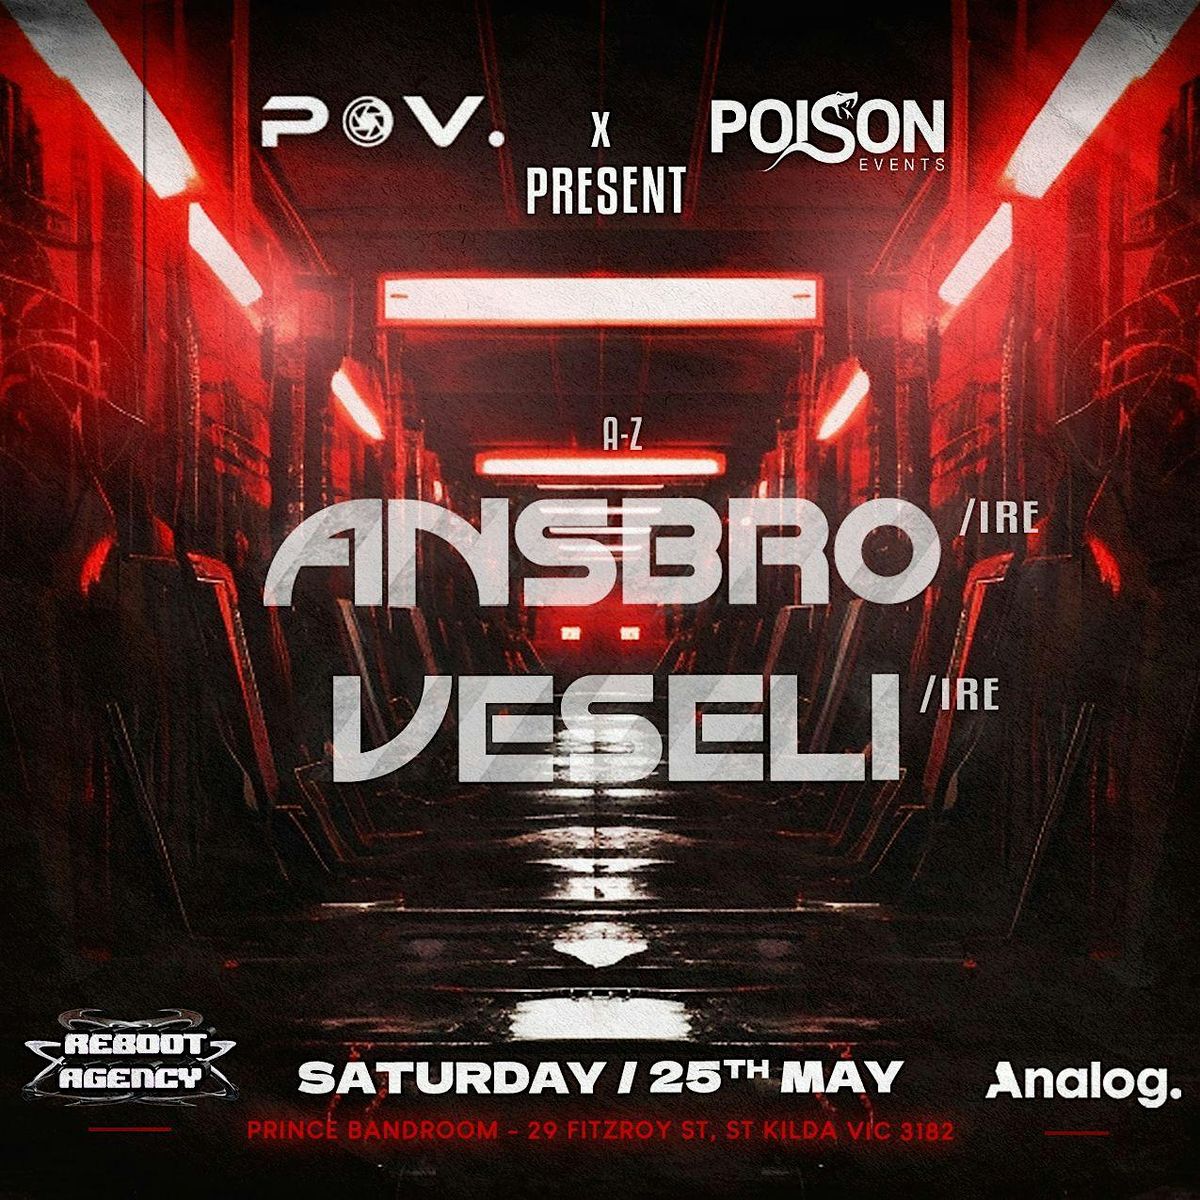 POV. x Poison presents ANSBRO | VESELI